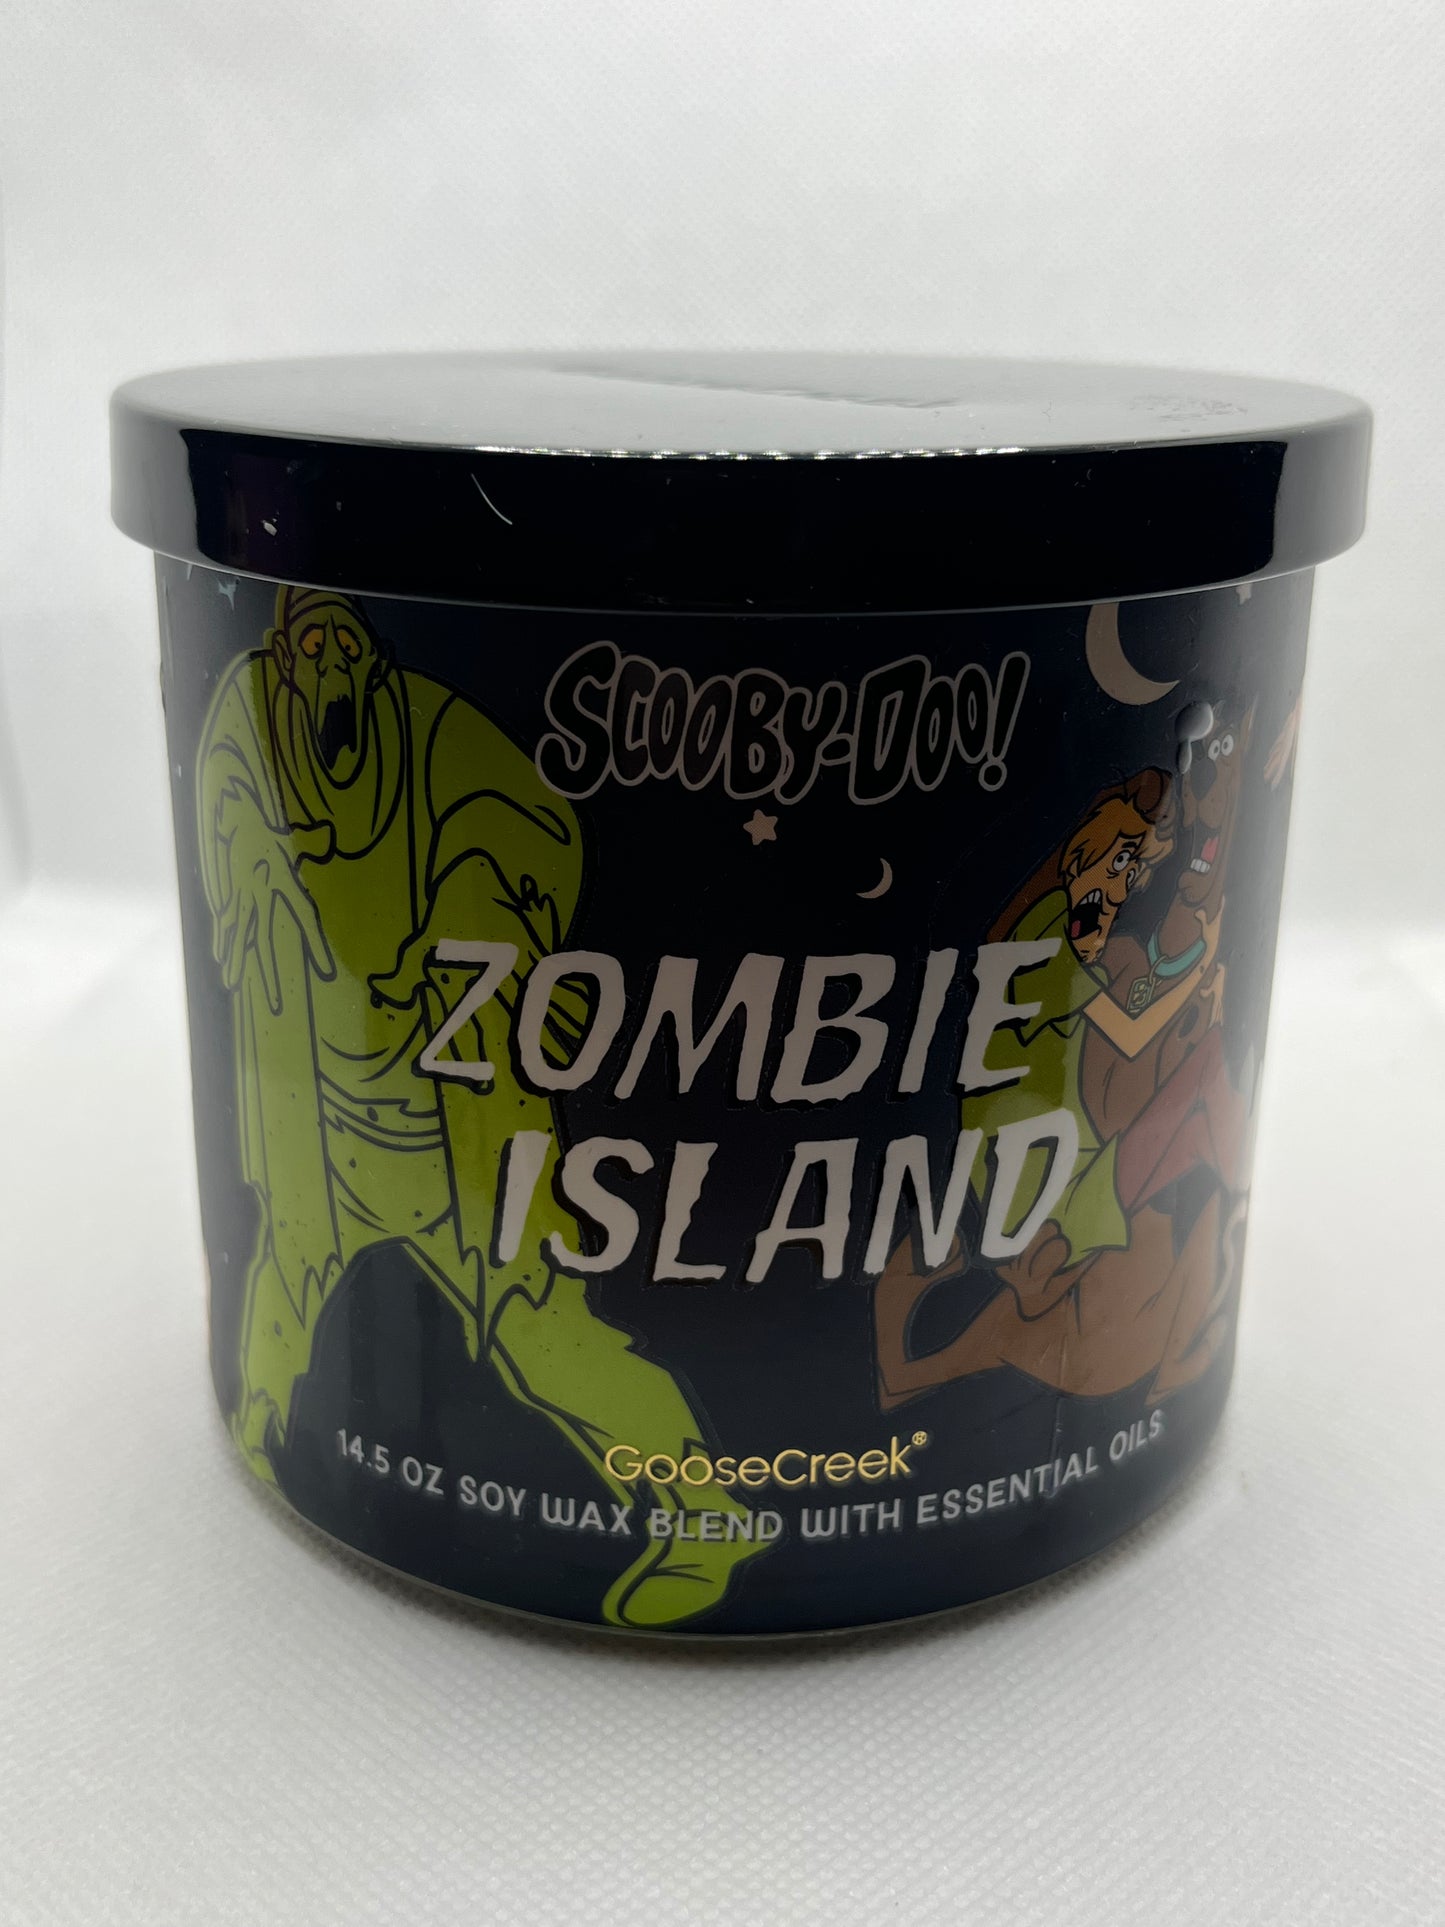 Scooby Doo Zombie Island 3 Wick Candle